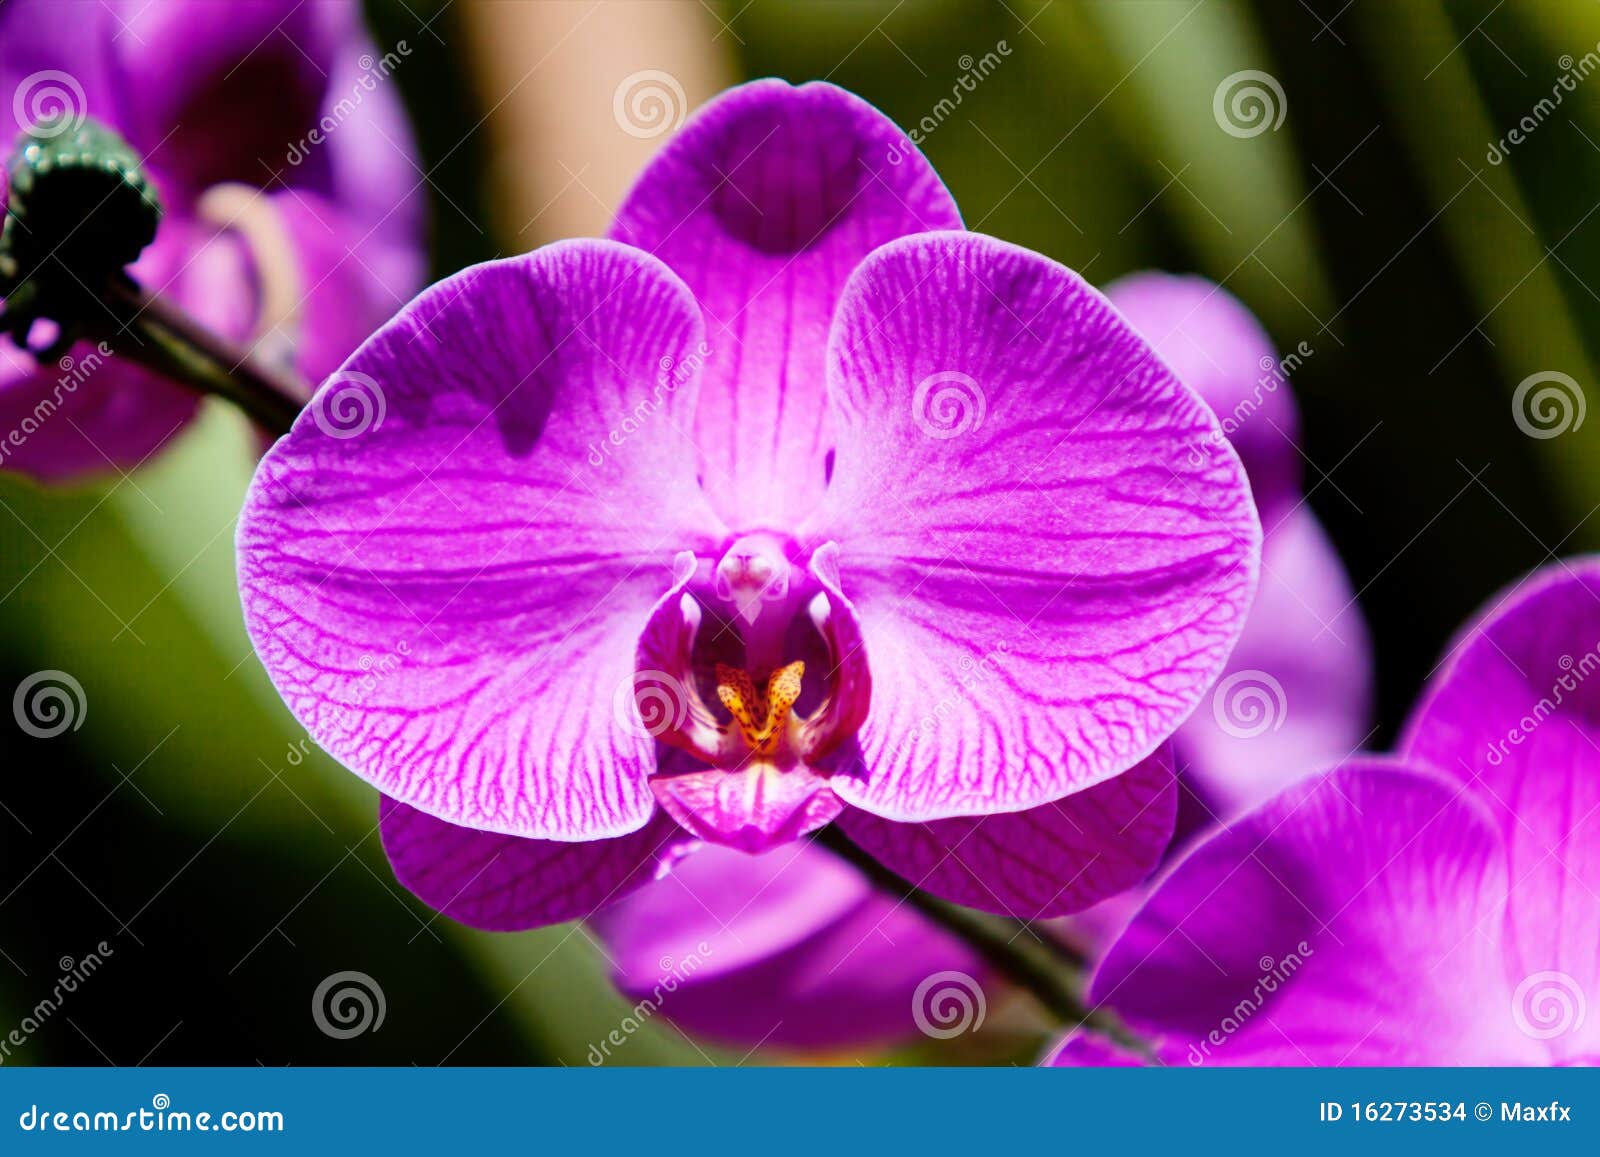 fucshia color orchid flower